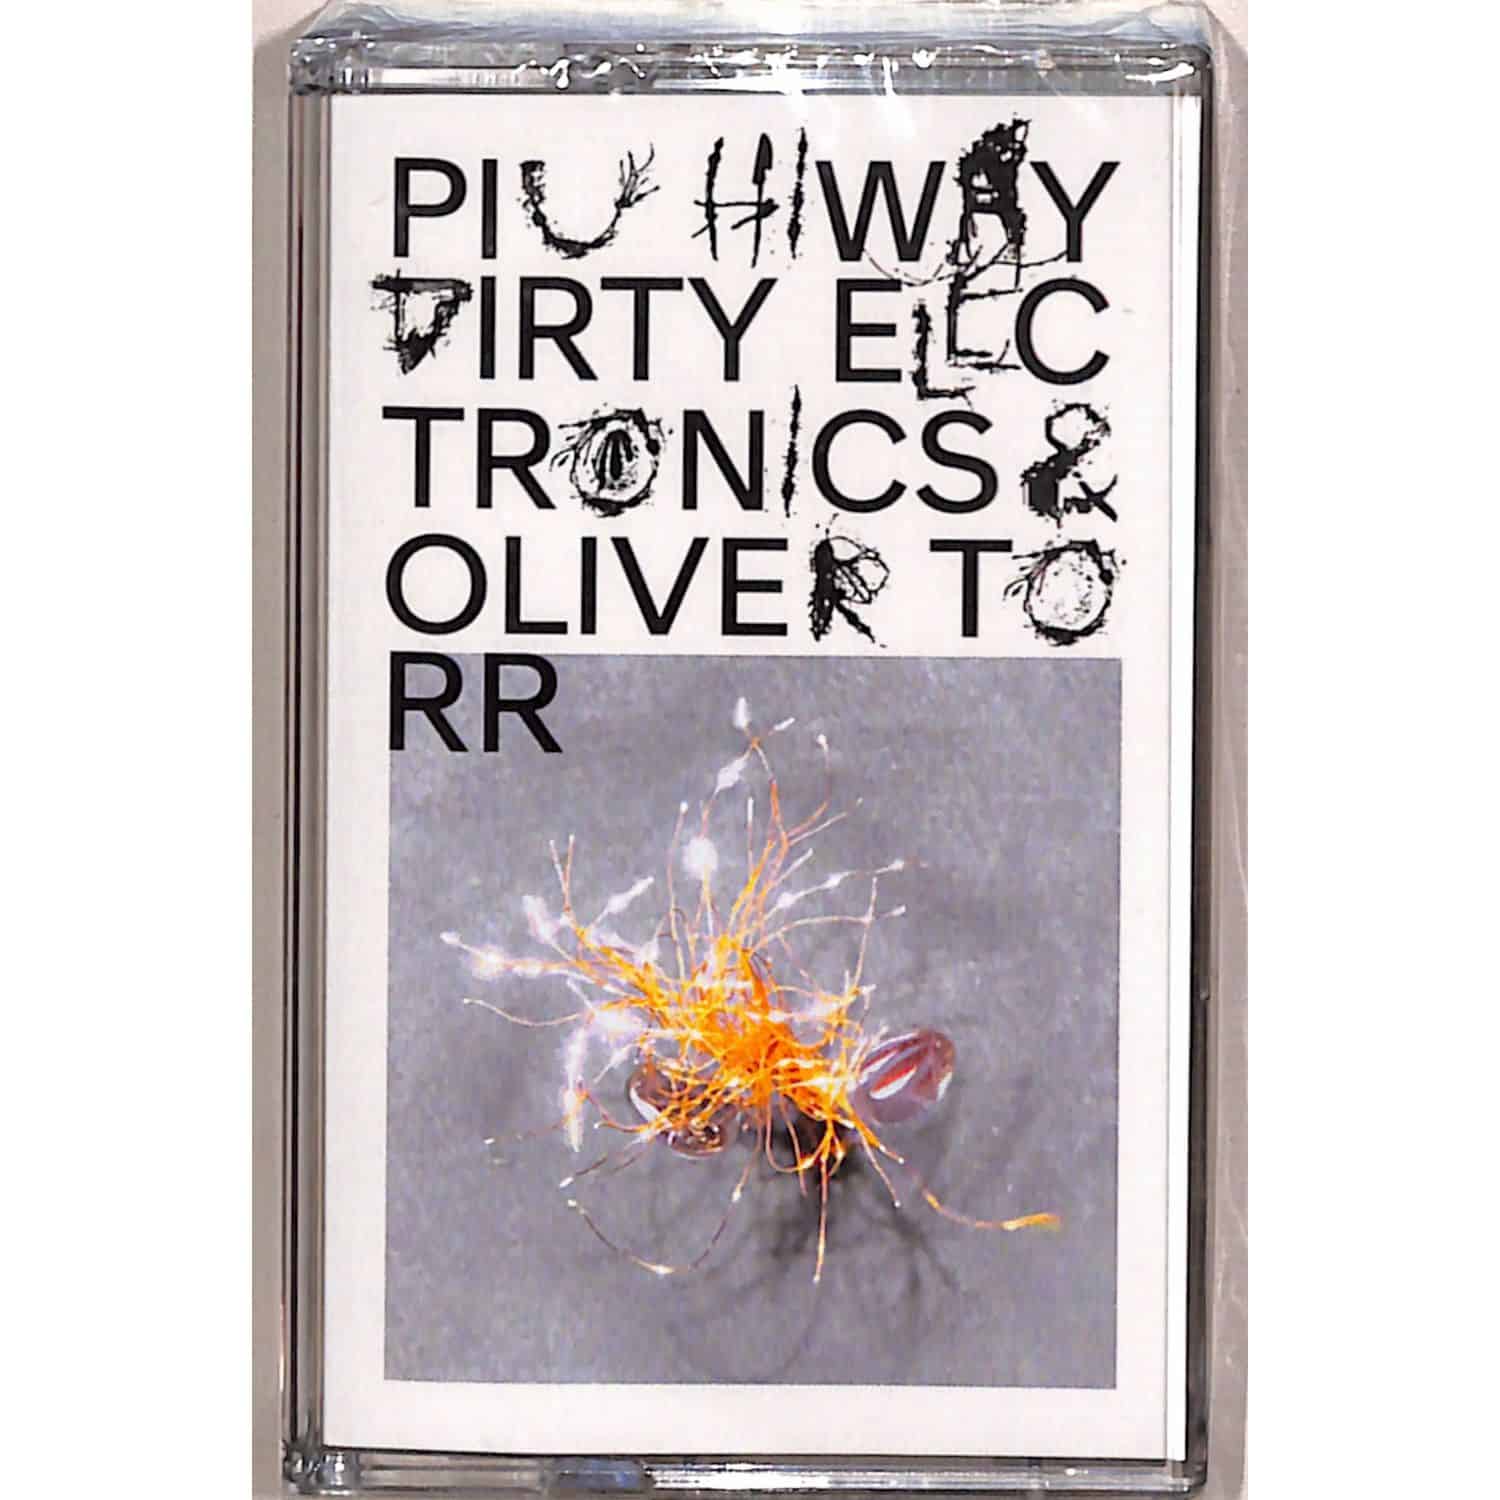 Dirty Electronics & Oliver Torr - PIU HIWAY 